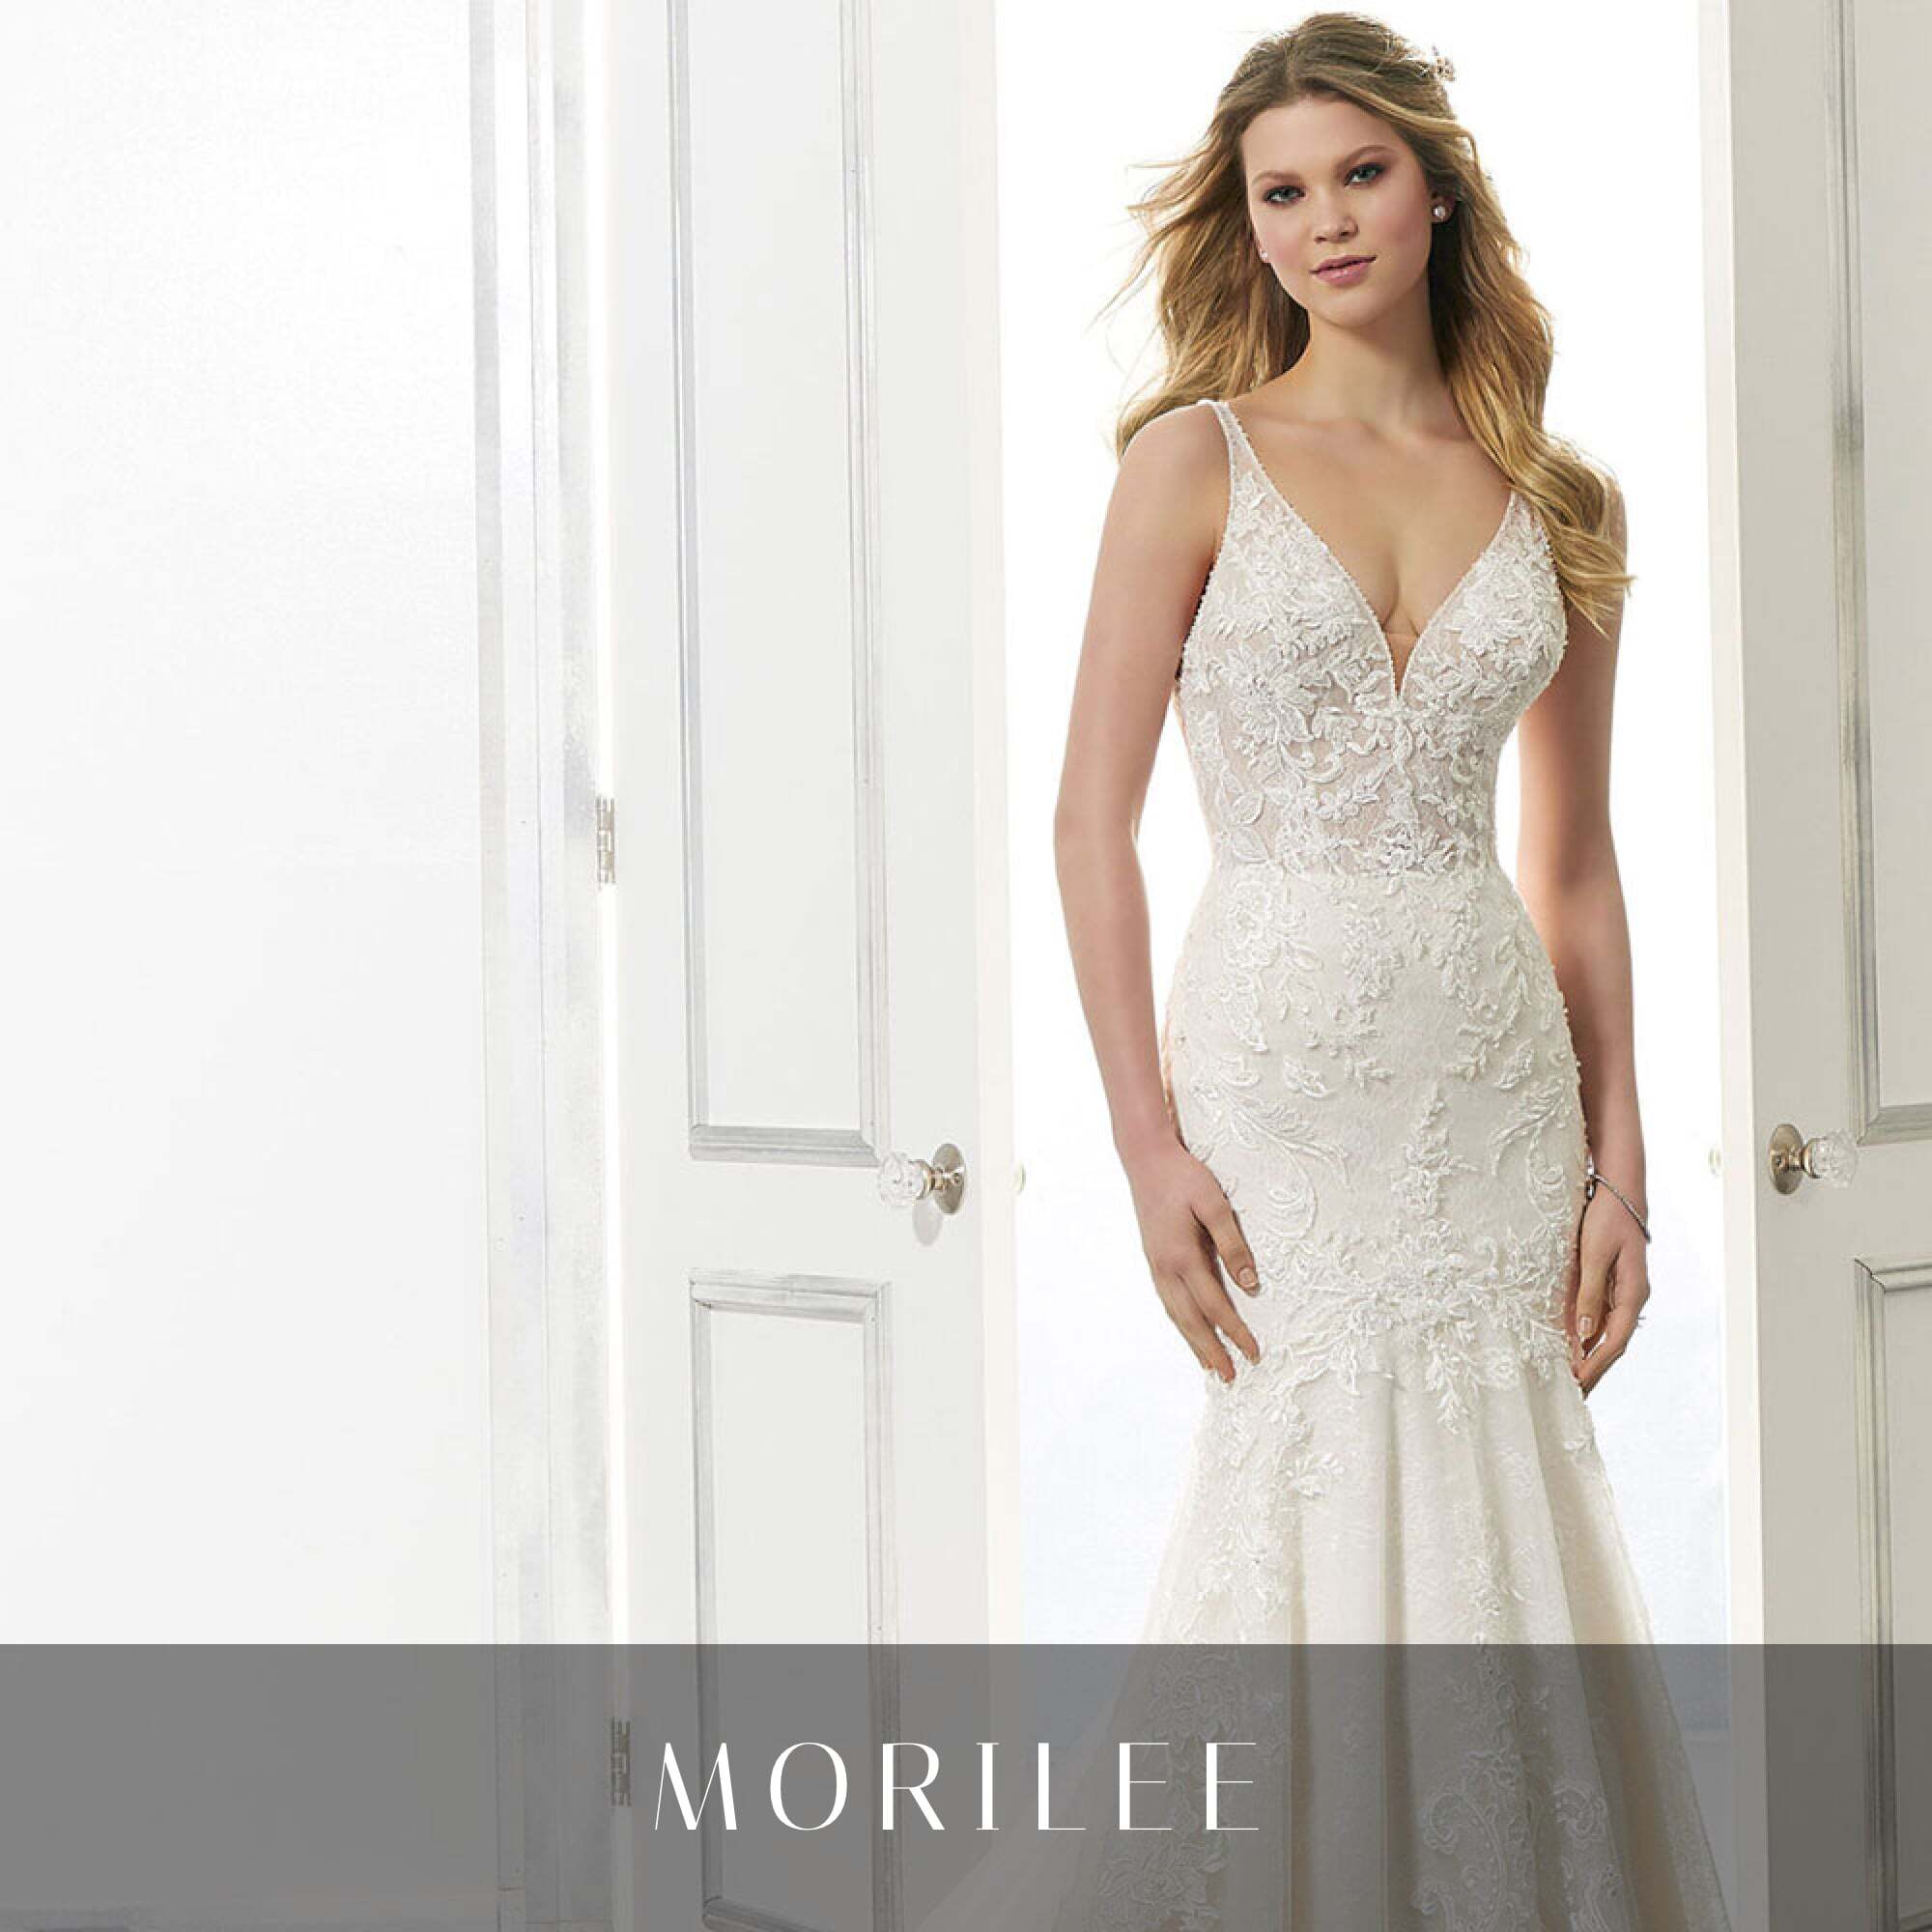 Morilee Wedding Dresses